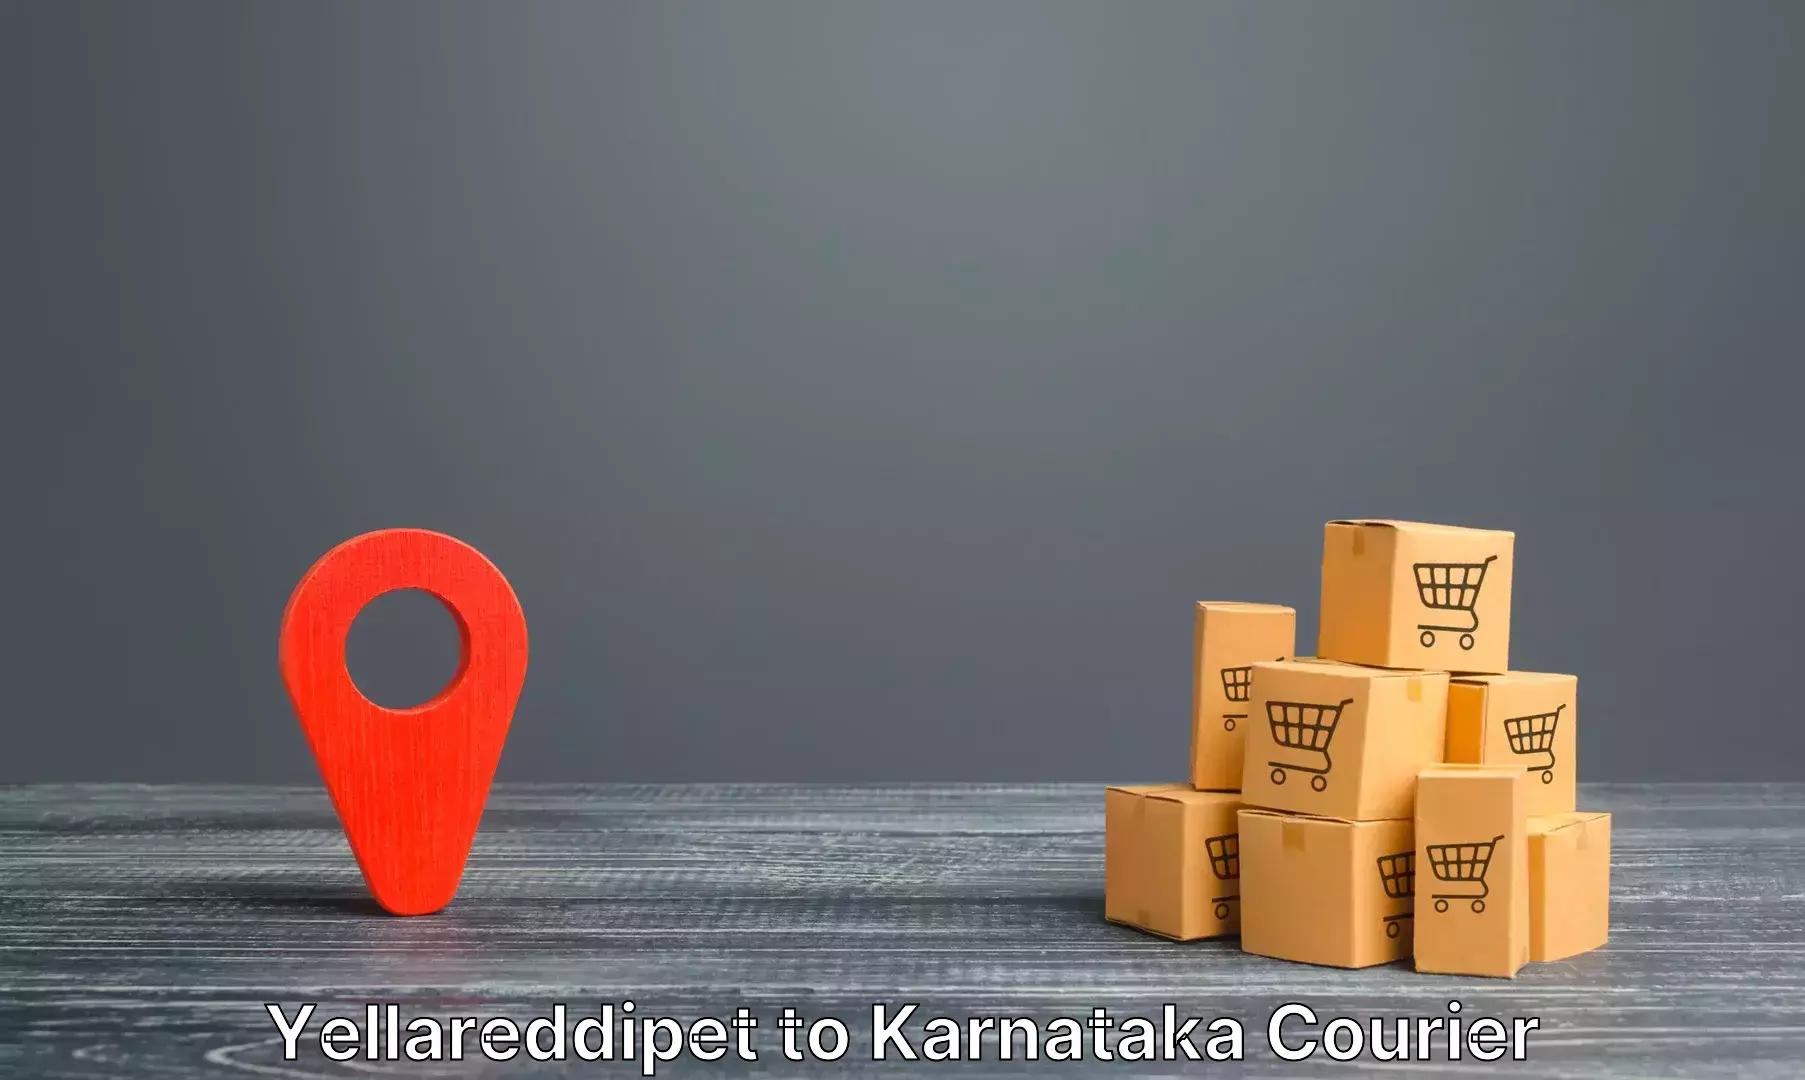 Luggage delivery app Yellareddipet to Kotturu